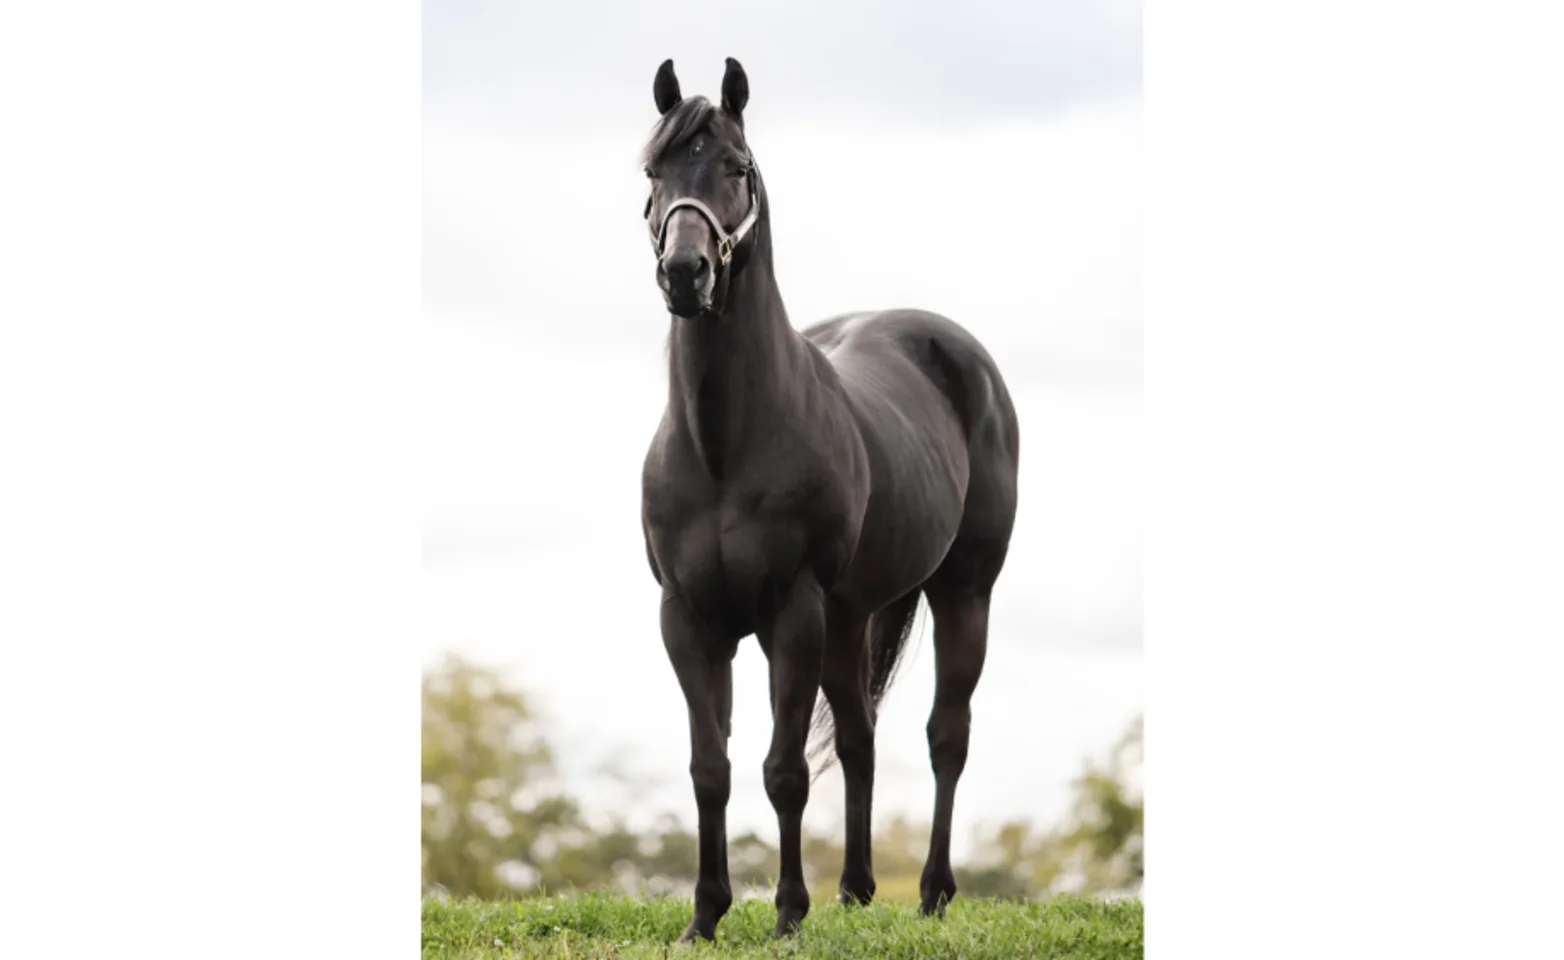 Rapid Ivory, a black horse